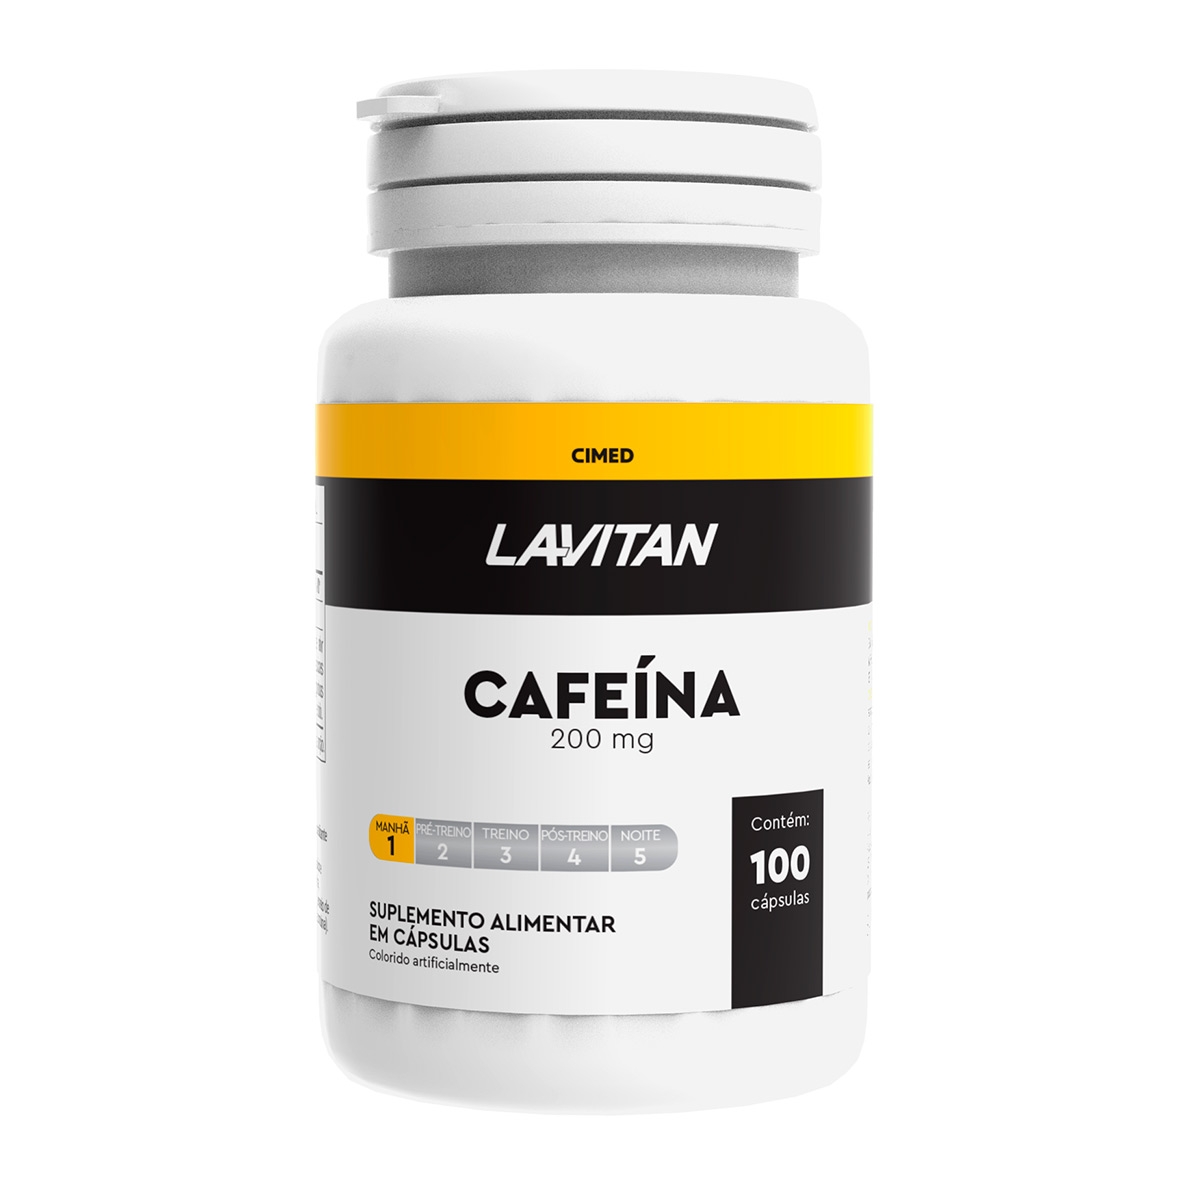 https://img.drogaraia.com.br/media/catalog/product/l/a/lavitan-cafeina-200mg-capsulas-770811-1.jpg